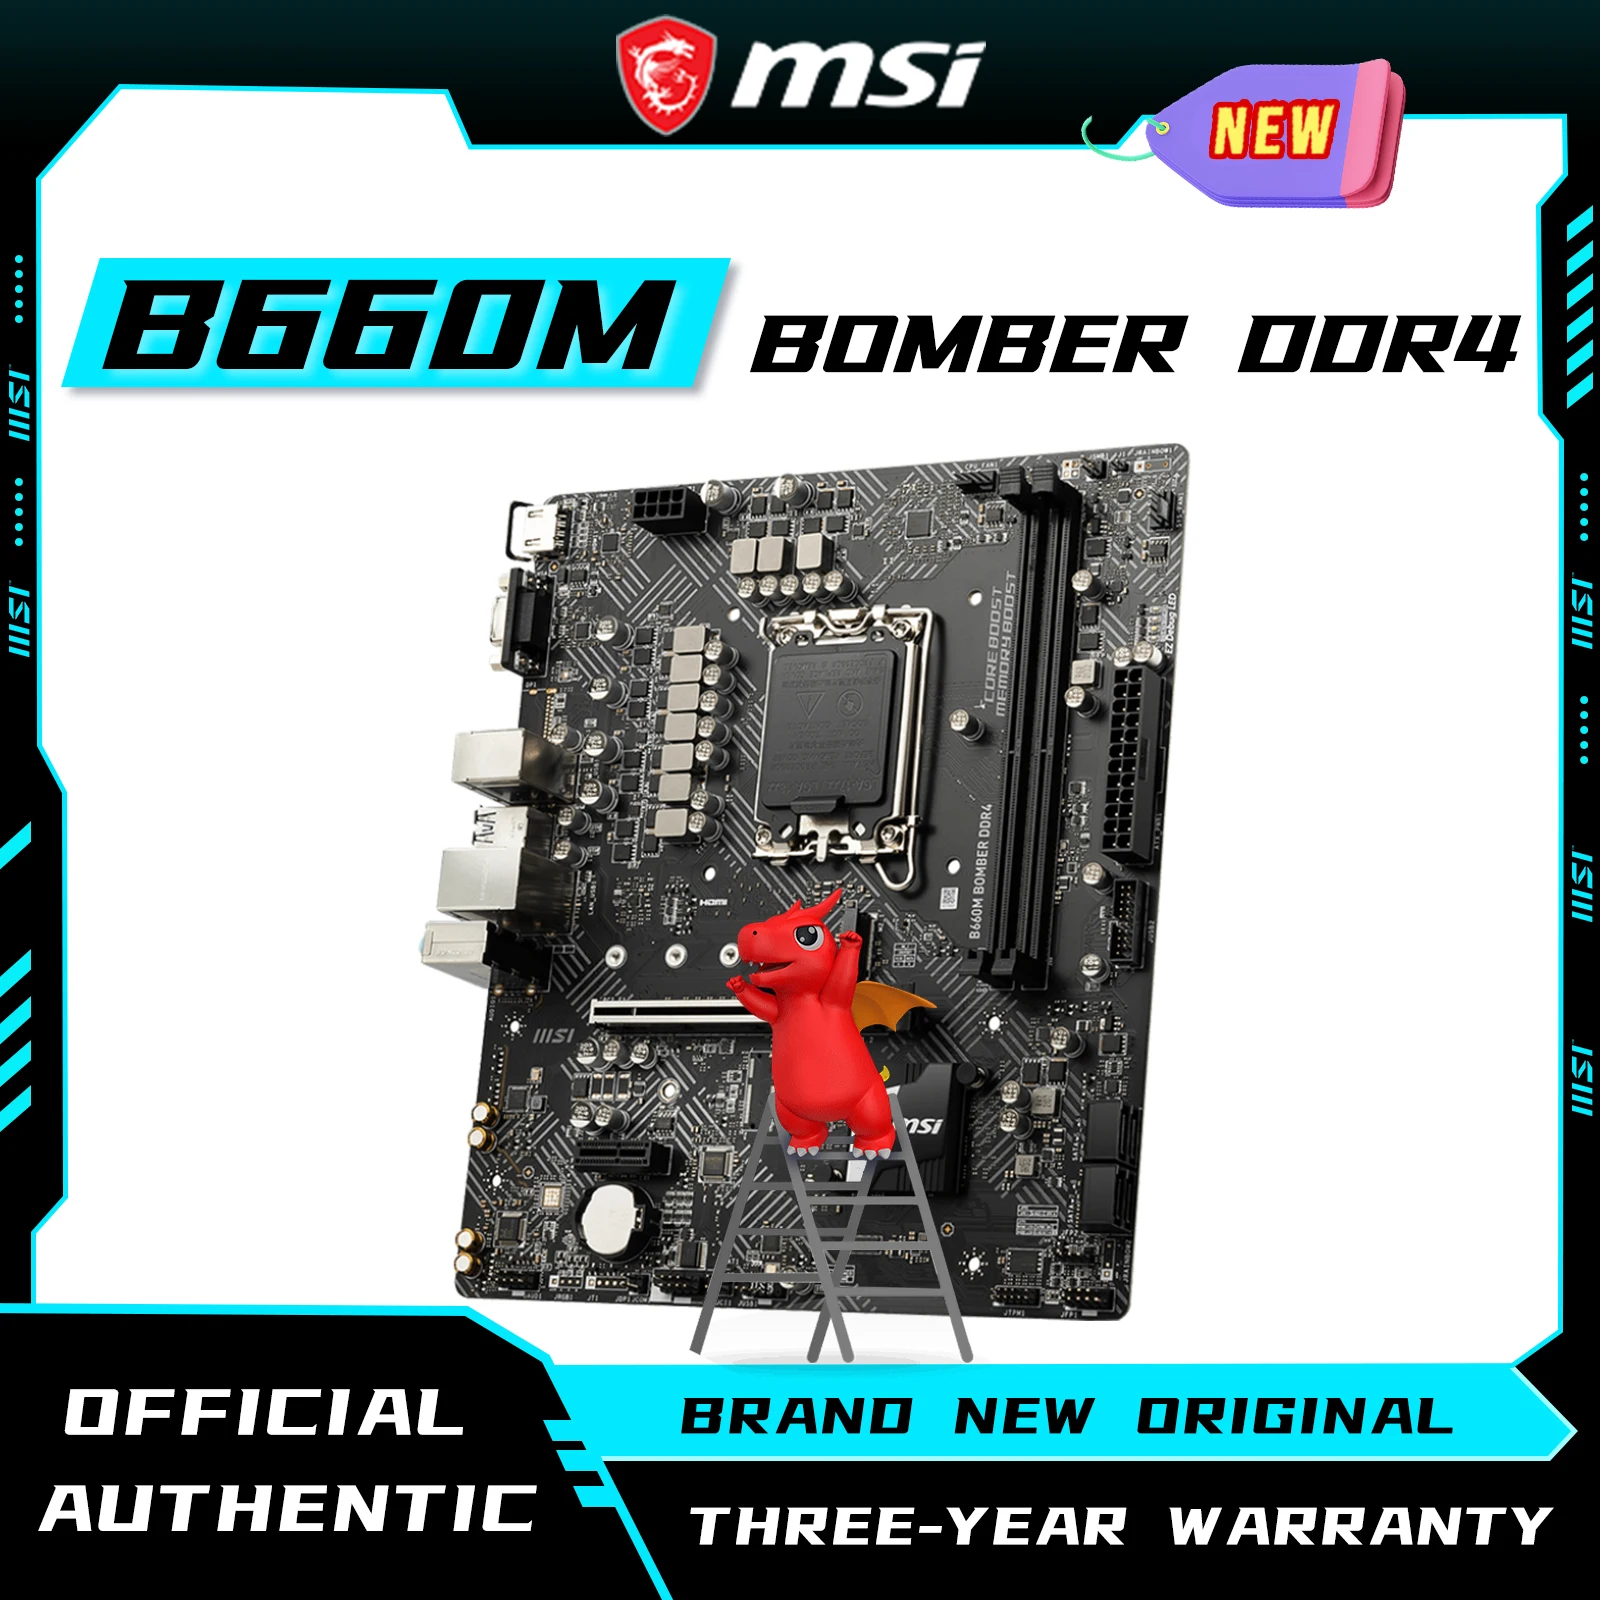 MS B660M BOMBER  DDR4 Placa Mae b660 Motherboard